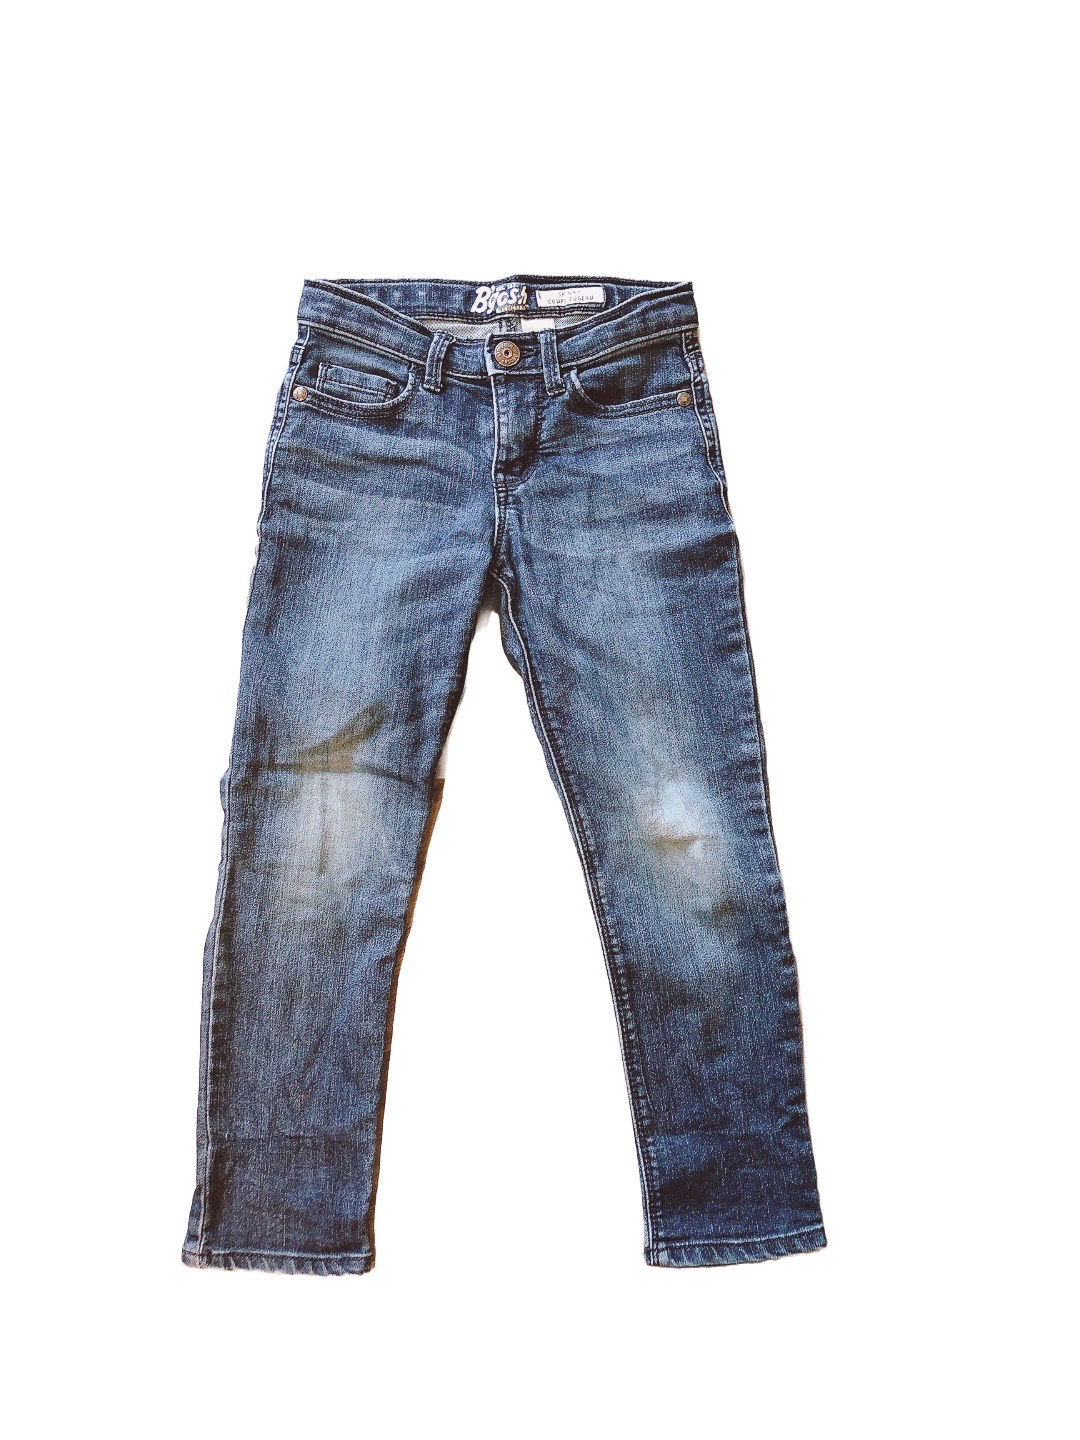 《OshKosh B’Gosh 》窄管深藍薄兒童牛仔褲(6)(110-120公分)
NT$49